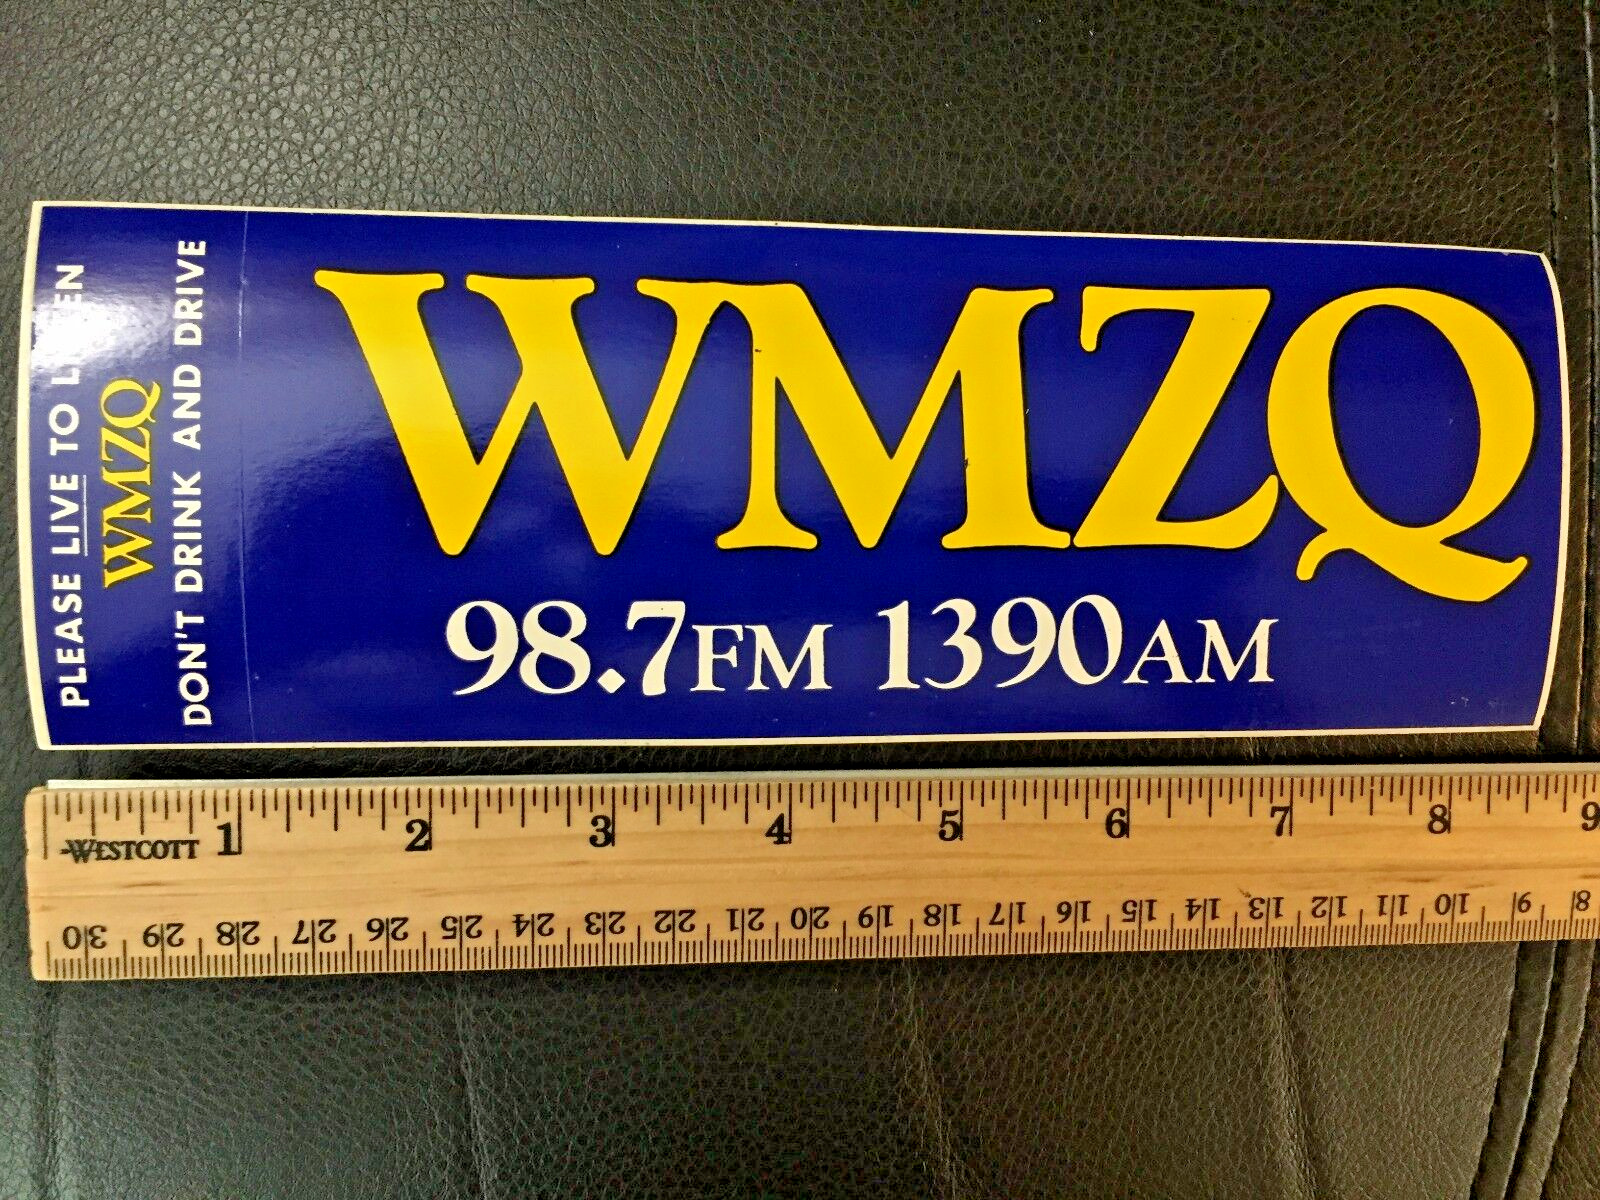 Vintage Bumper Sticker Decal 1985 WMZQ 1390 AM Radio Station Blue Sign FM 98.7